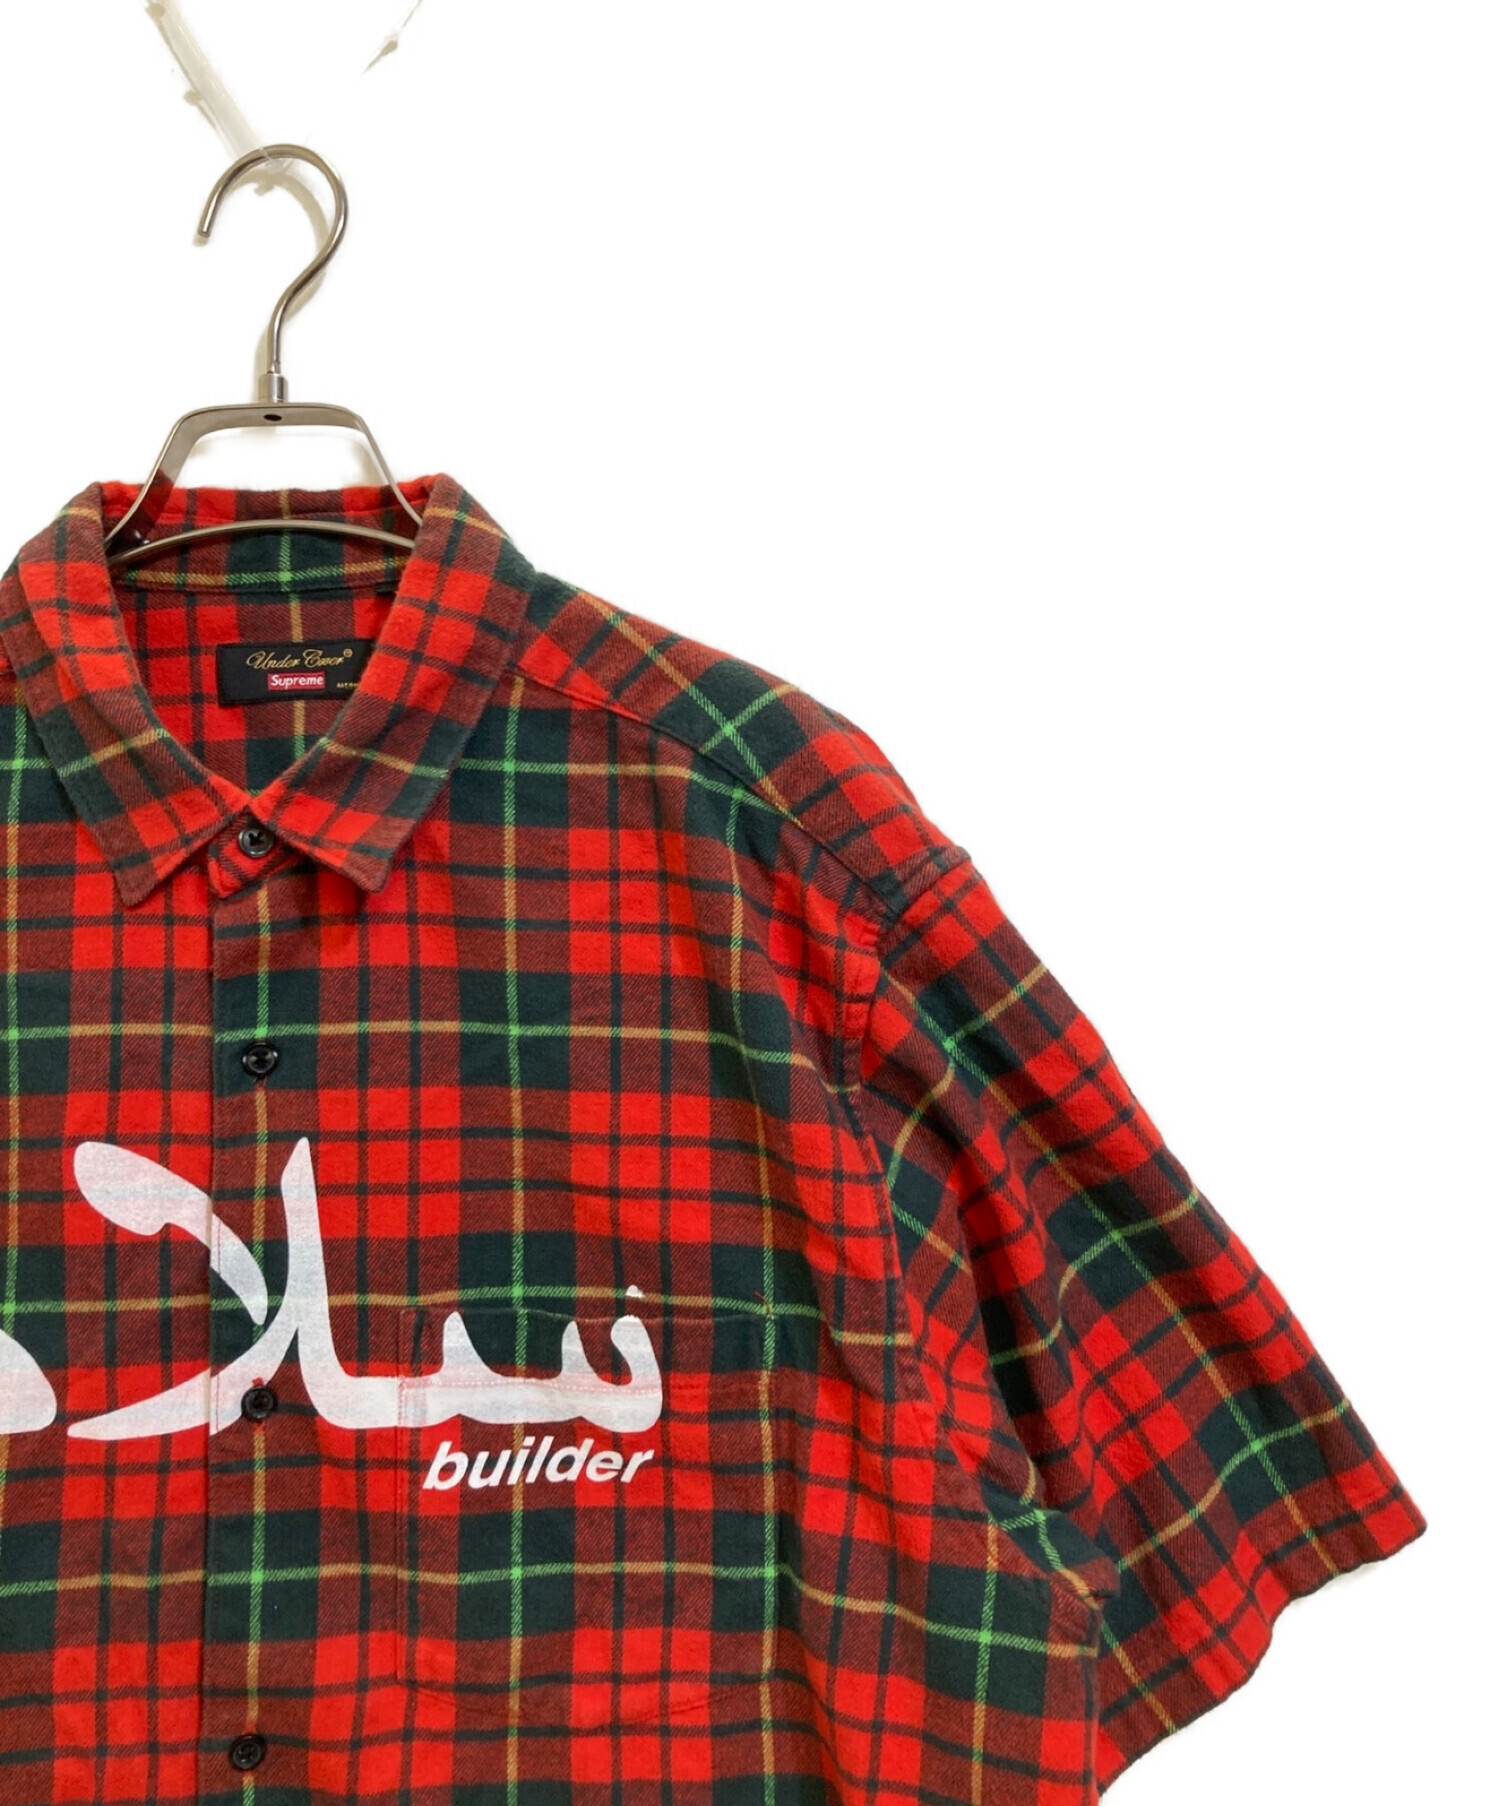 UNDERCOVER (アンダーカバー) Supreme (シュプリーム) 23SS Flannel Shirt Arabic Logo レッド  サイズ:M